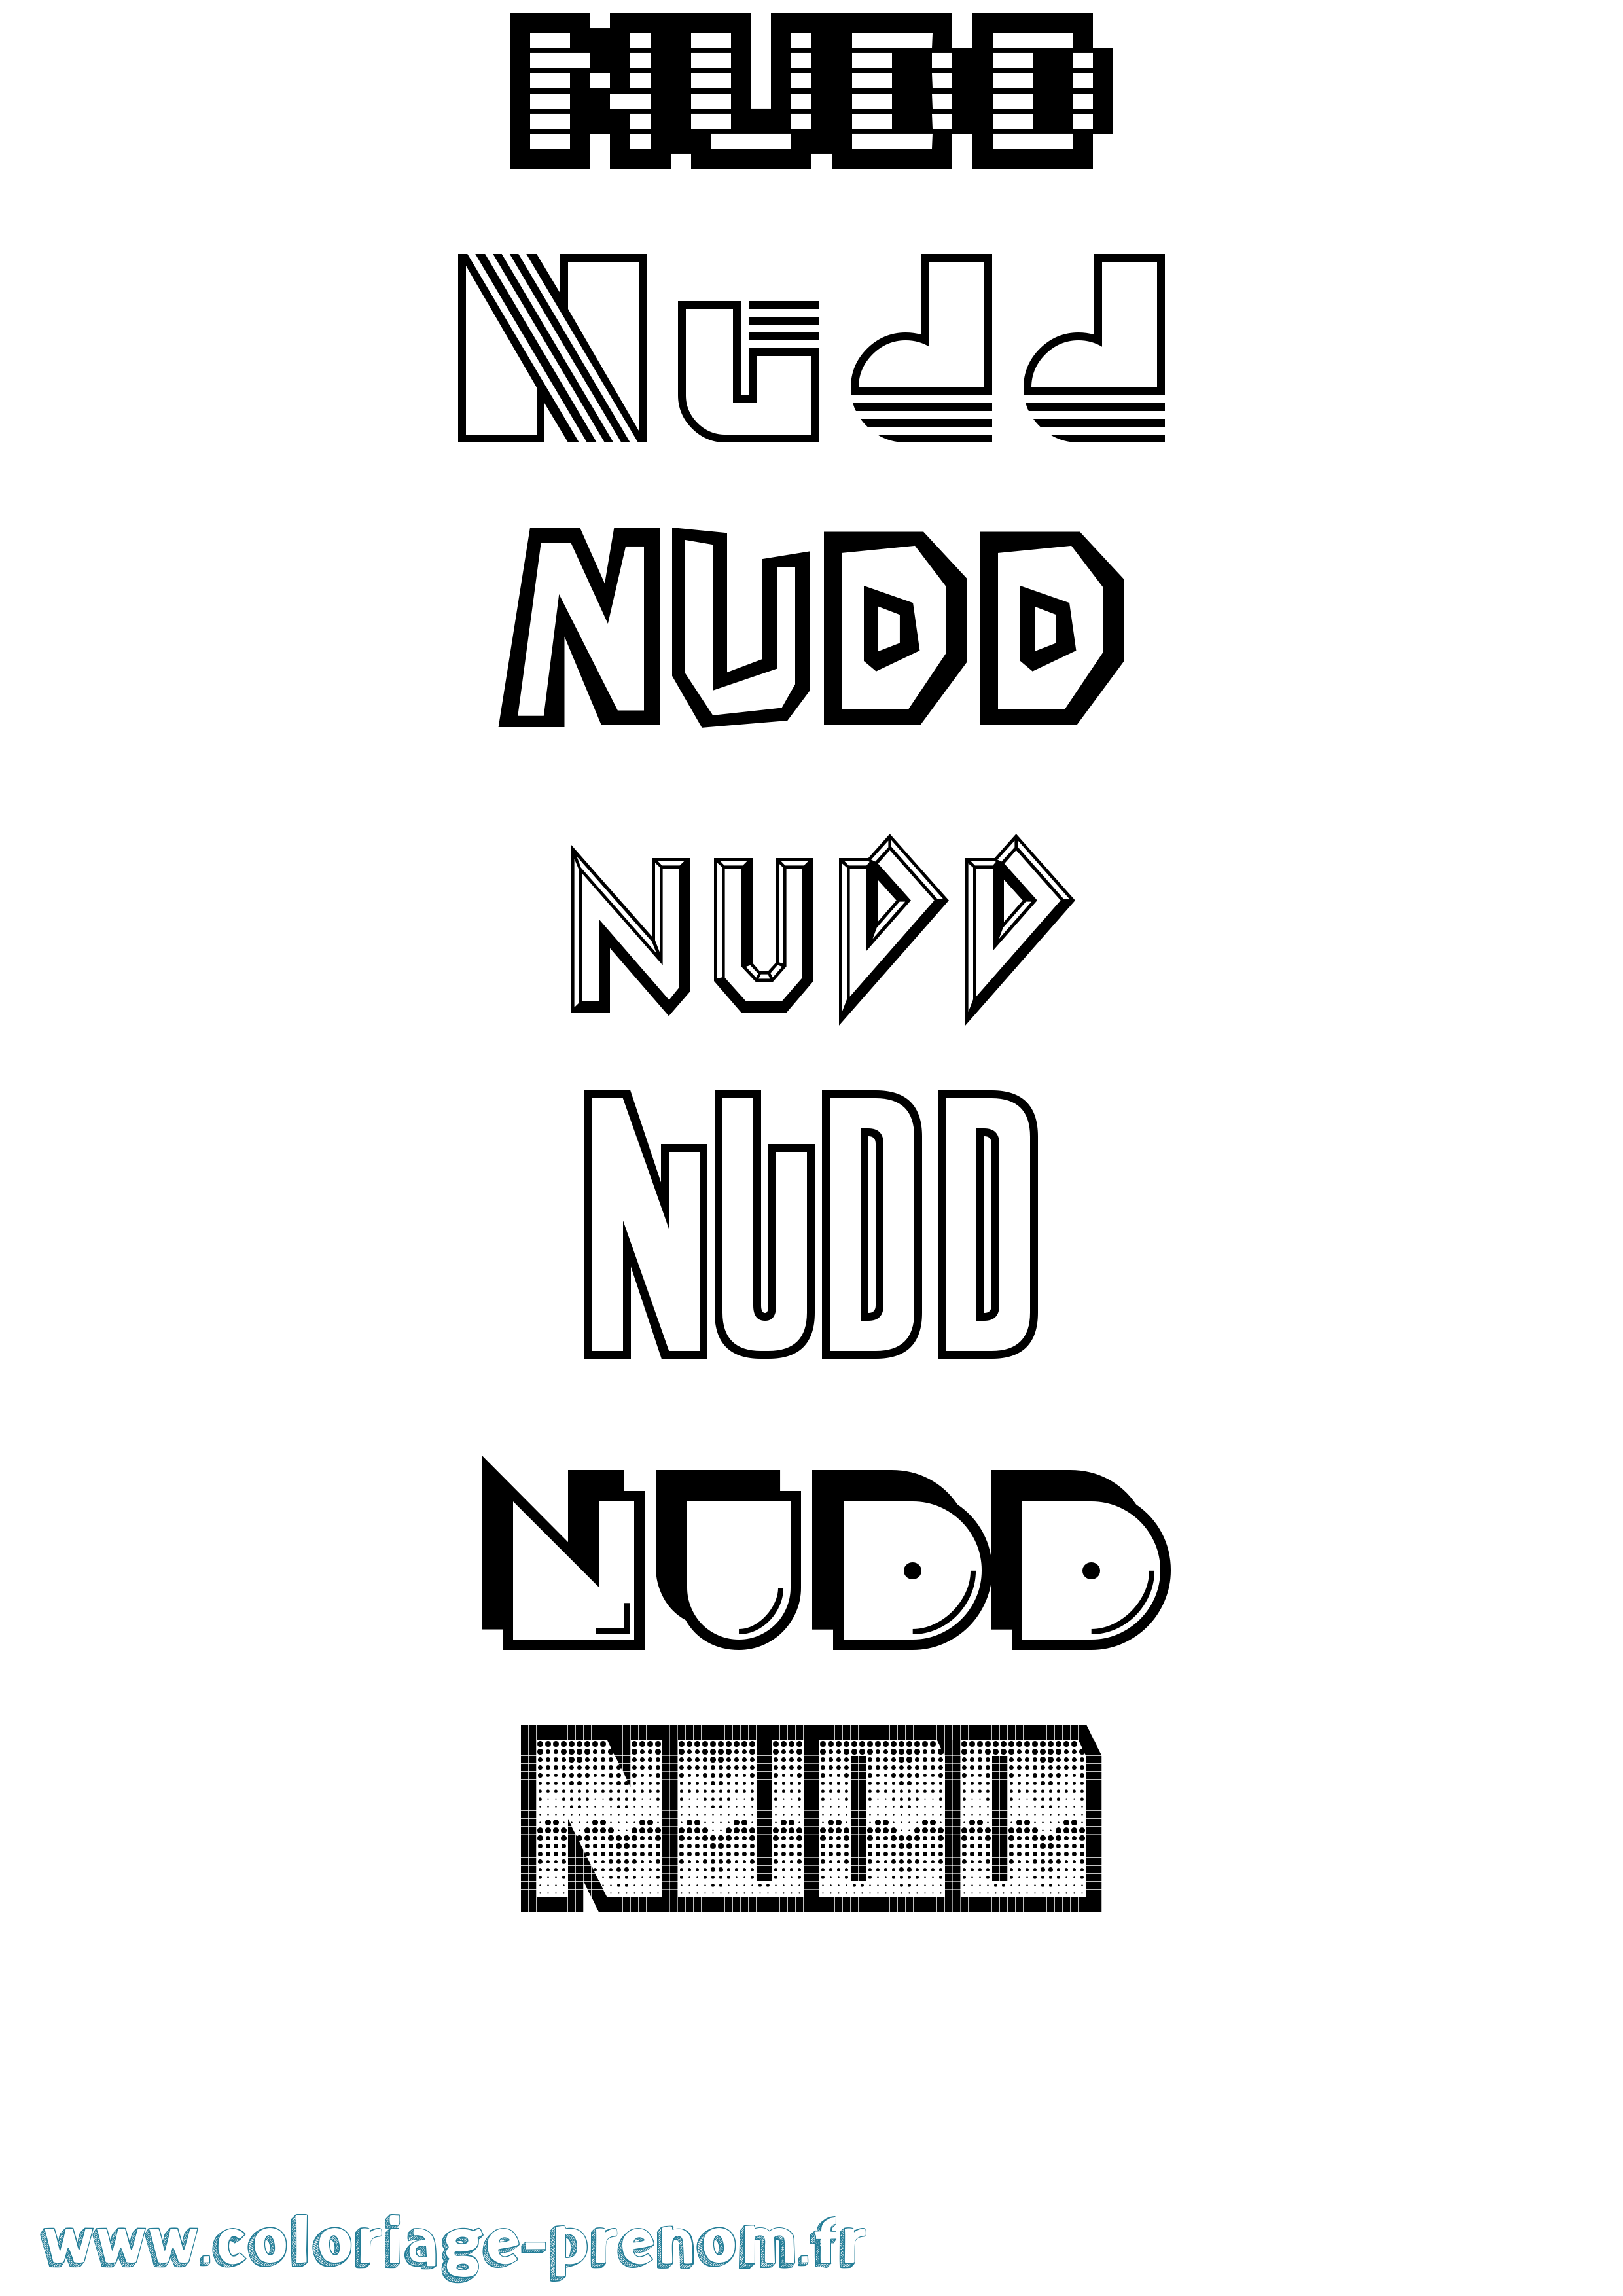 Coloriage prénom Nudd Jeux Vidéos